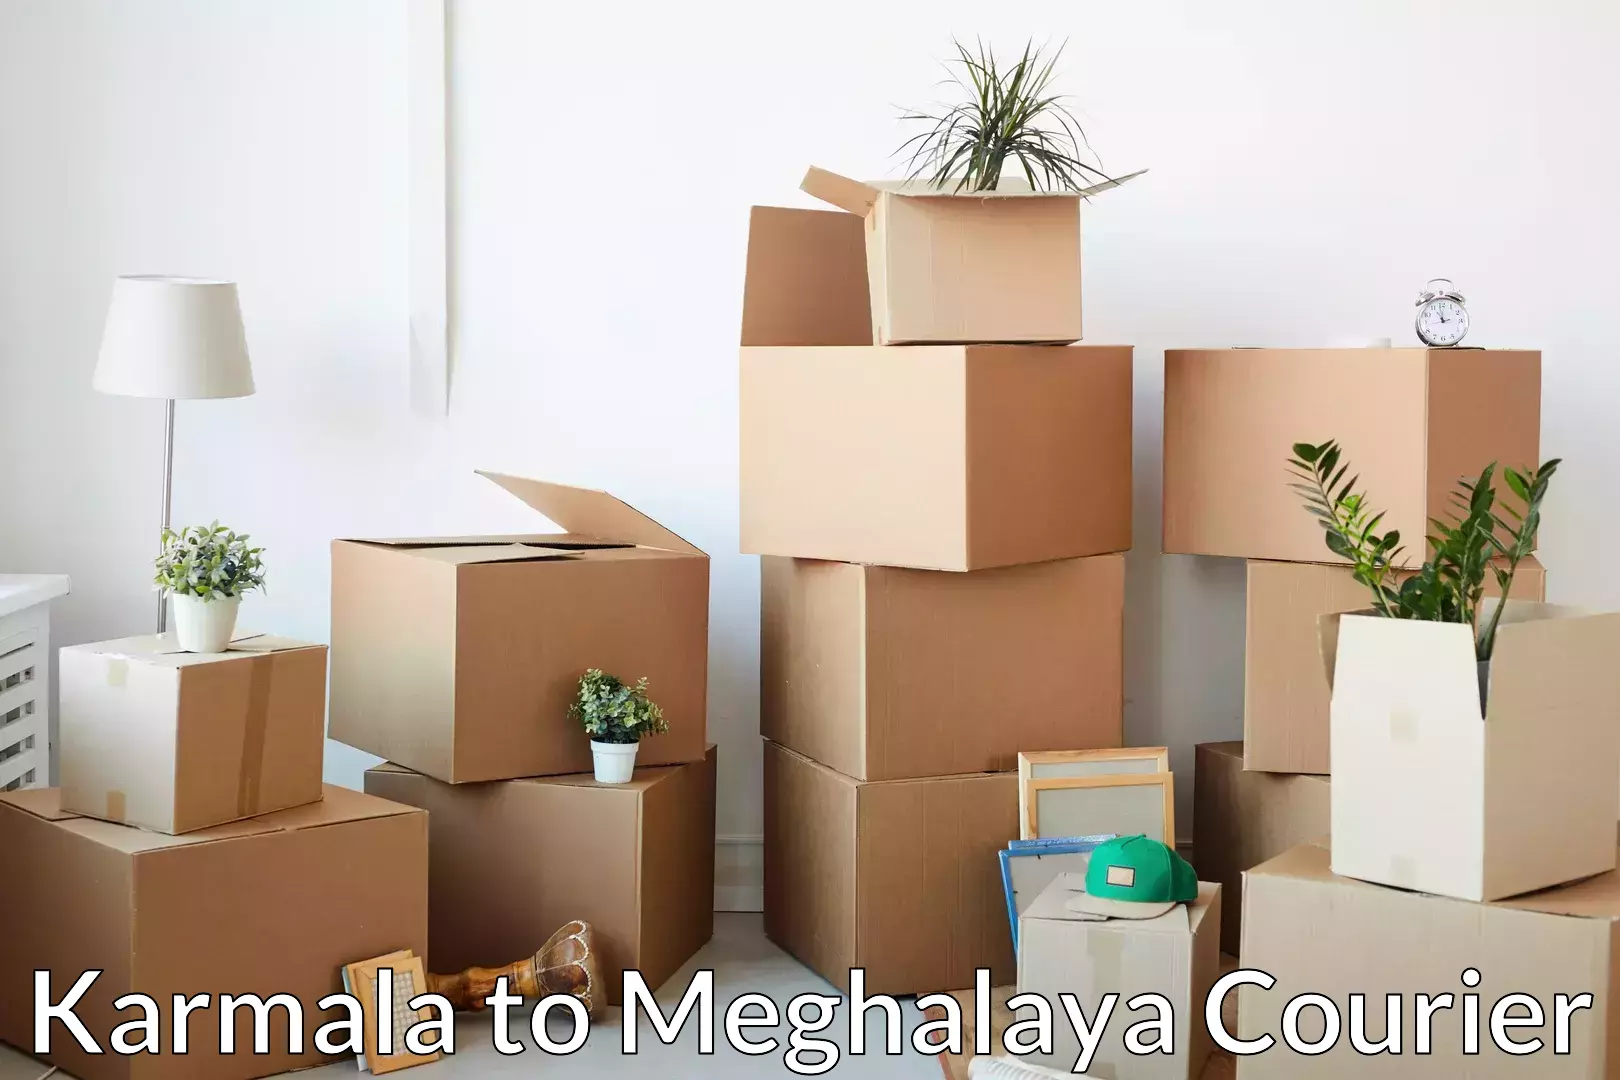 Professional moving company Karmala to Shillong